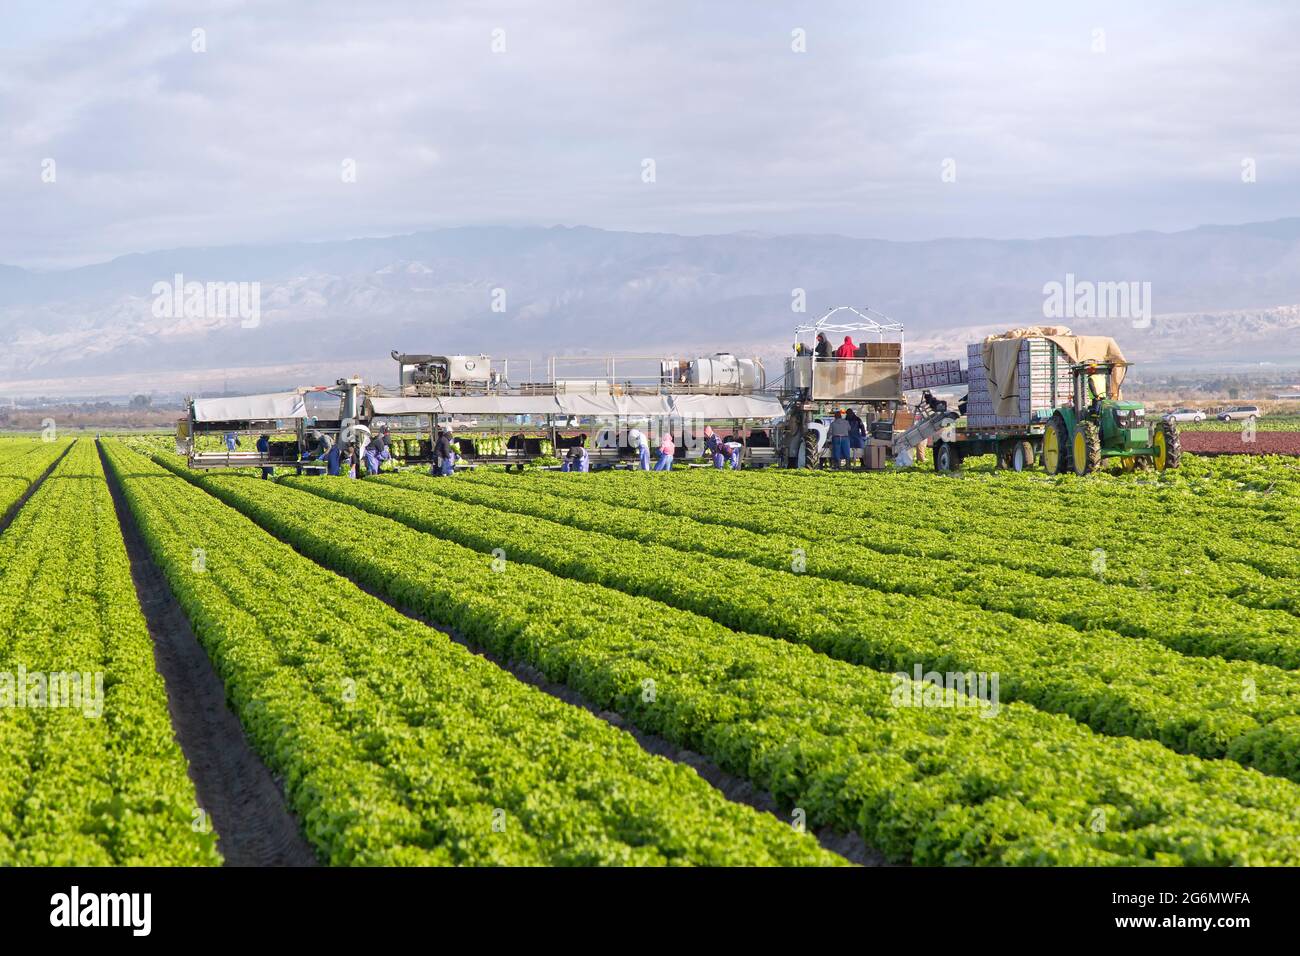 Rows of Organic Green Leaf Lettuce 'Lactuca sativa', hispanic field workers harvesting, wearing Covid-19 Virus mask. Stock Photo